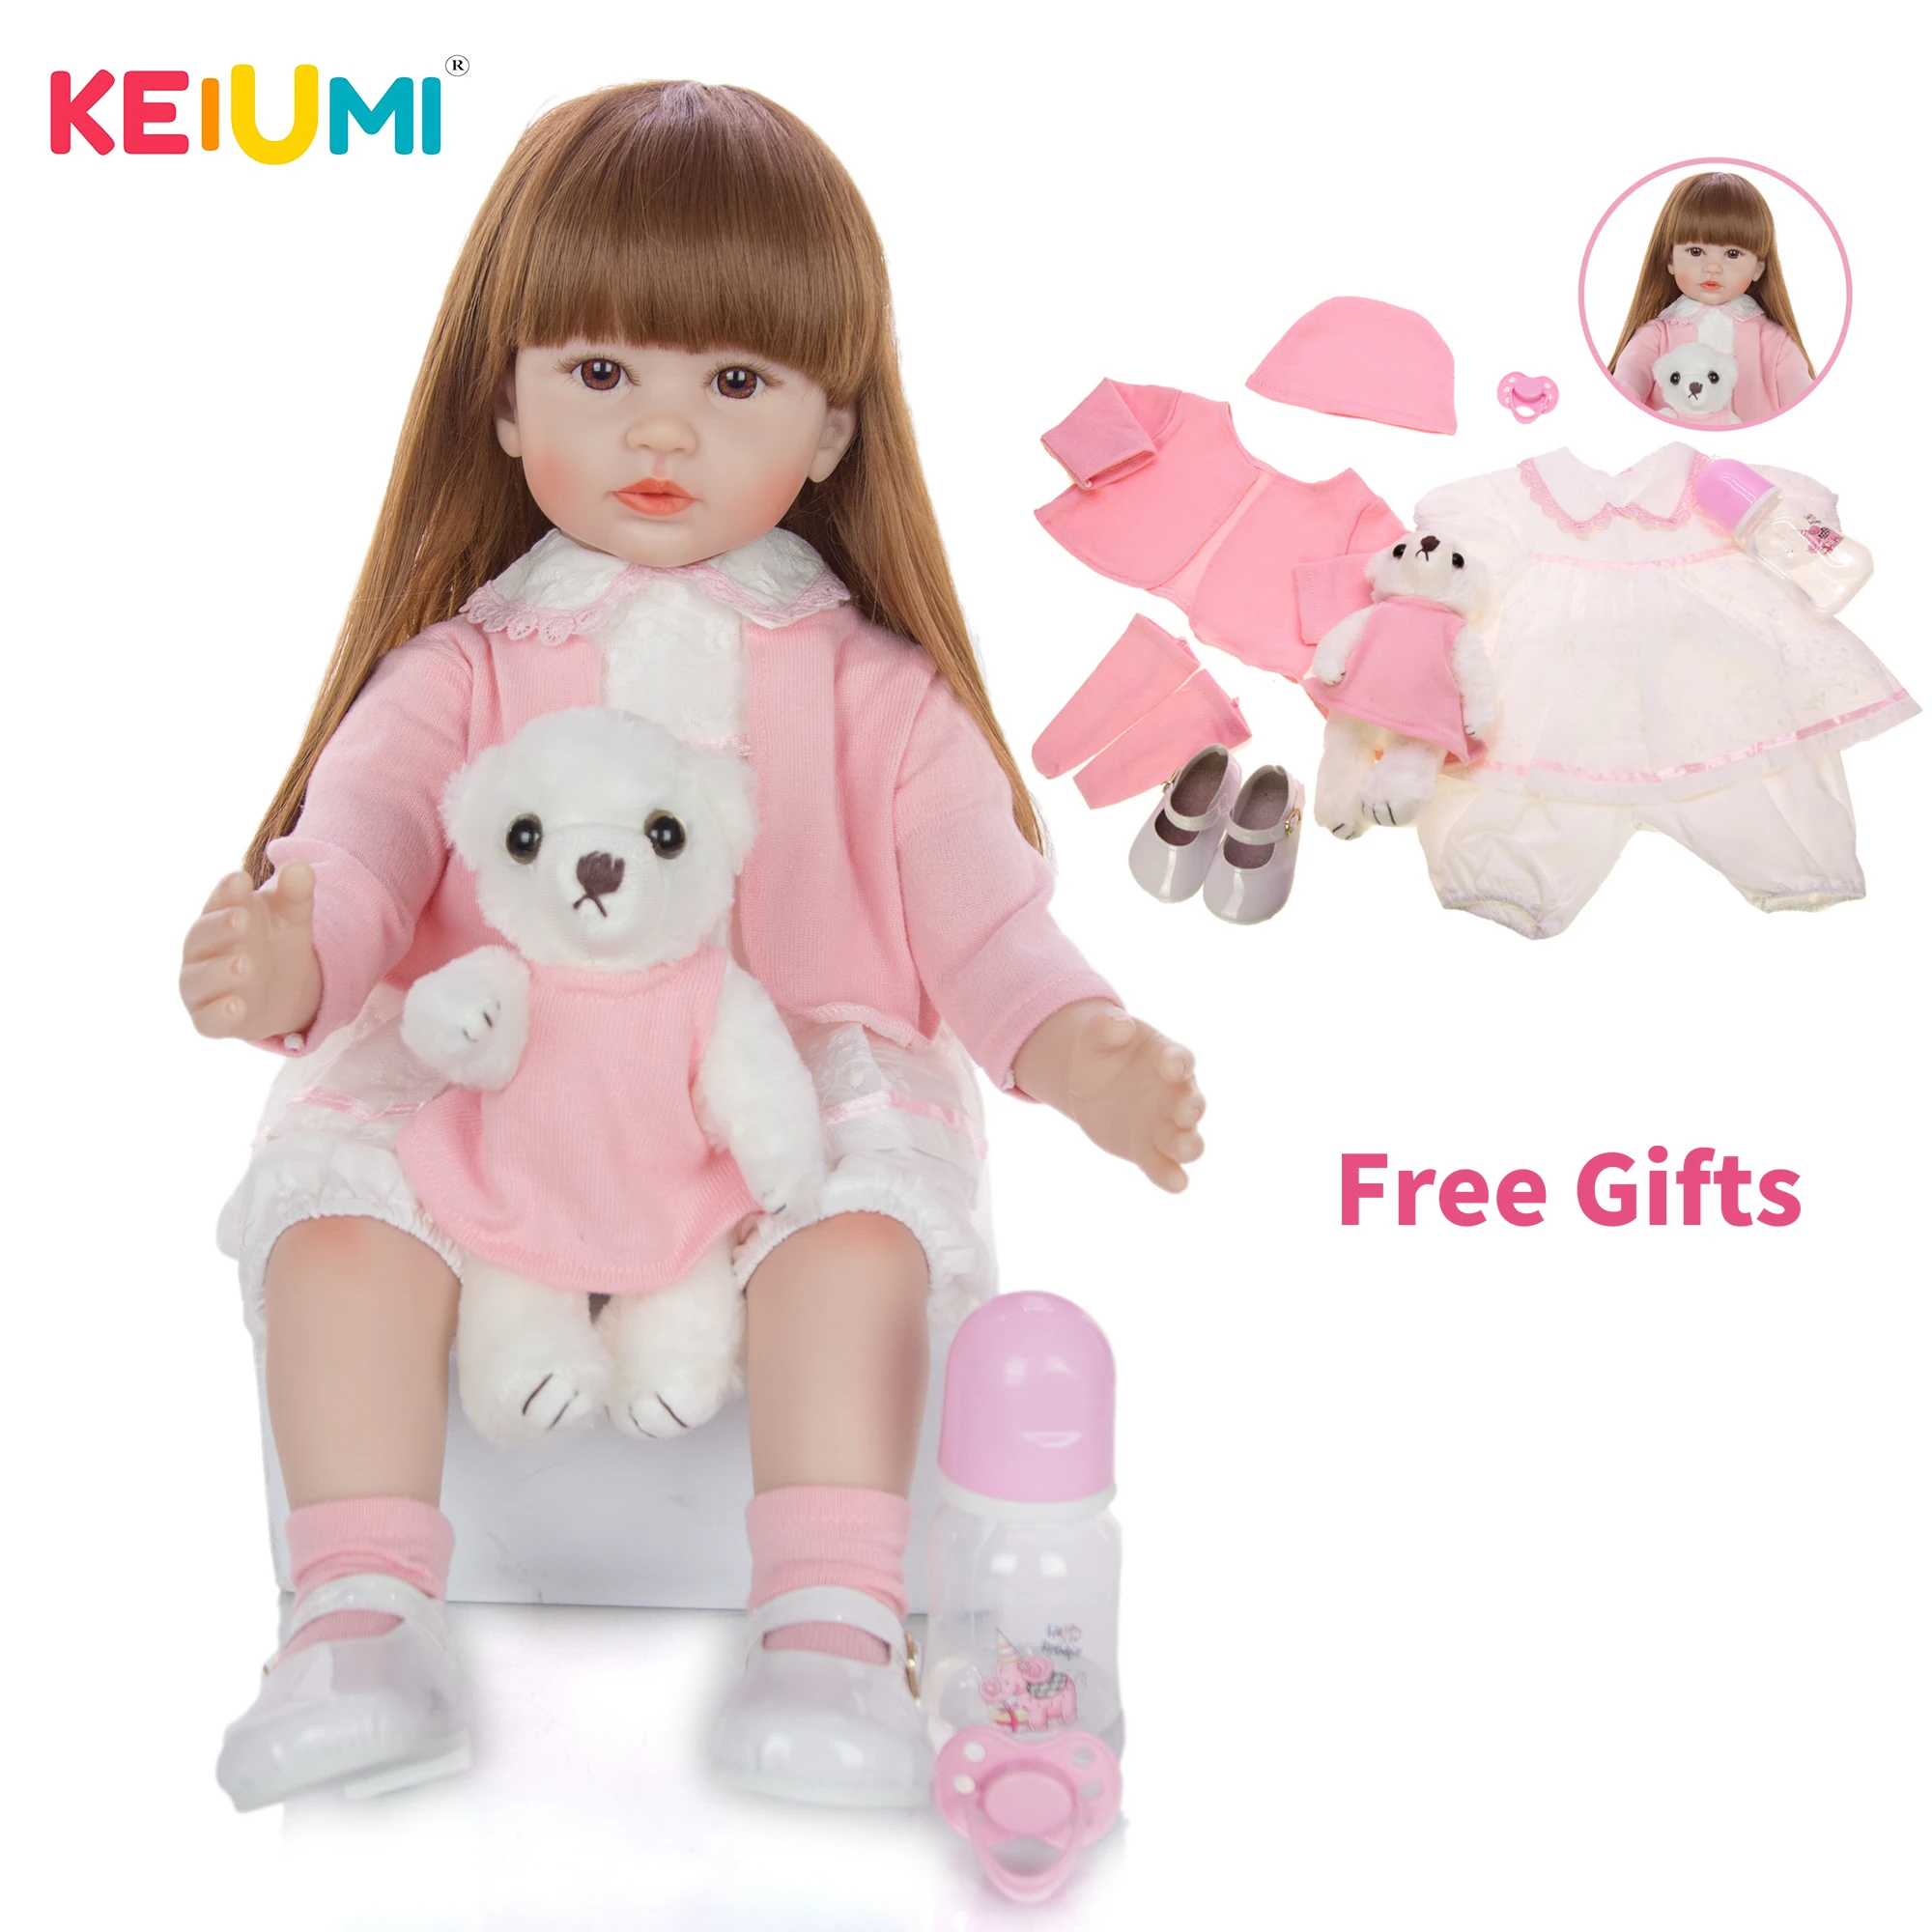 

KEIUMI 24 Inch Lovely Reborn Boneca Menina Realistic Cute 60 cm Soft Silicone Reborn Babies Doll Children's Day Birthday Gifts